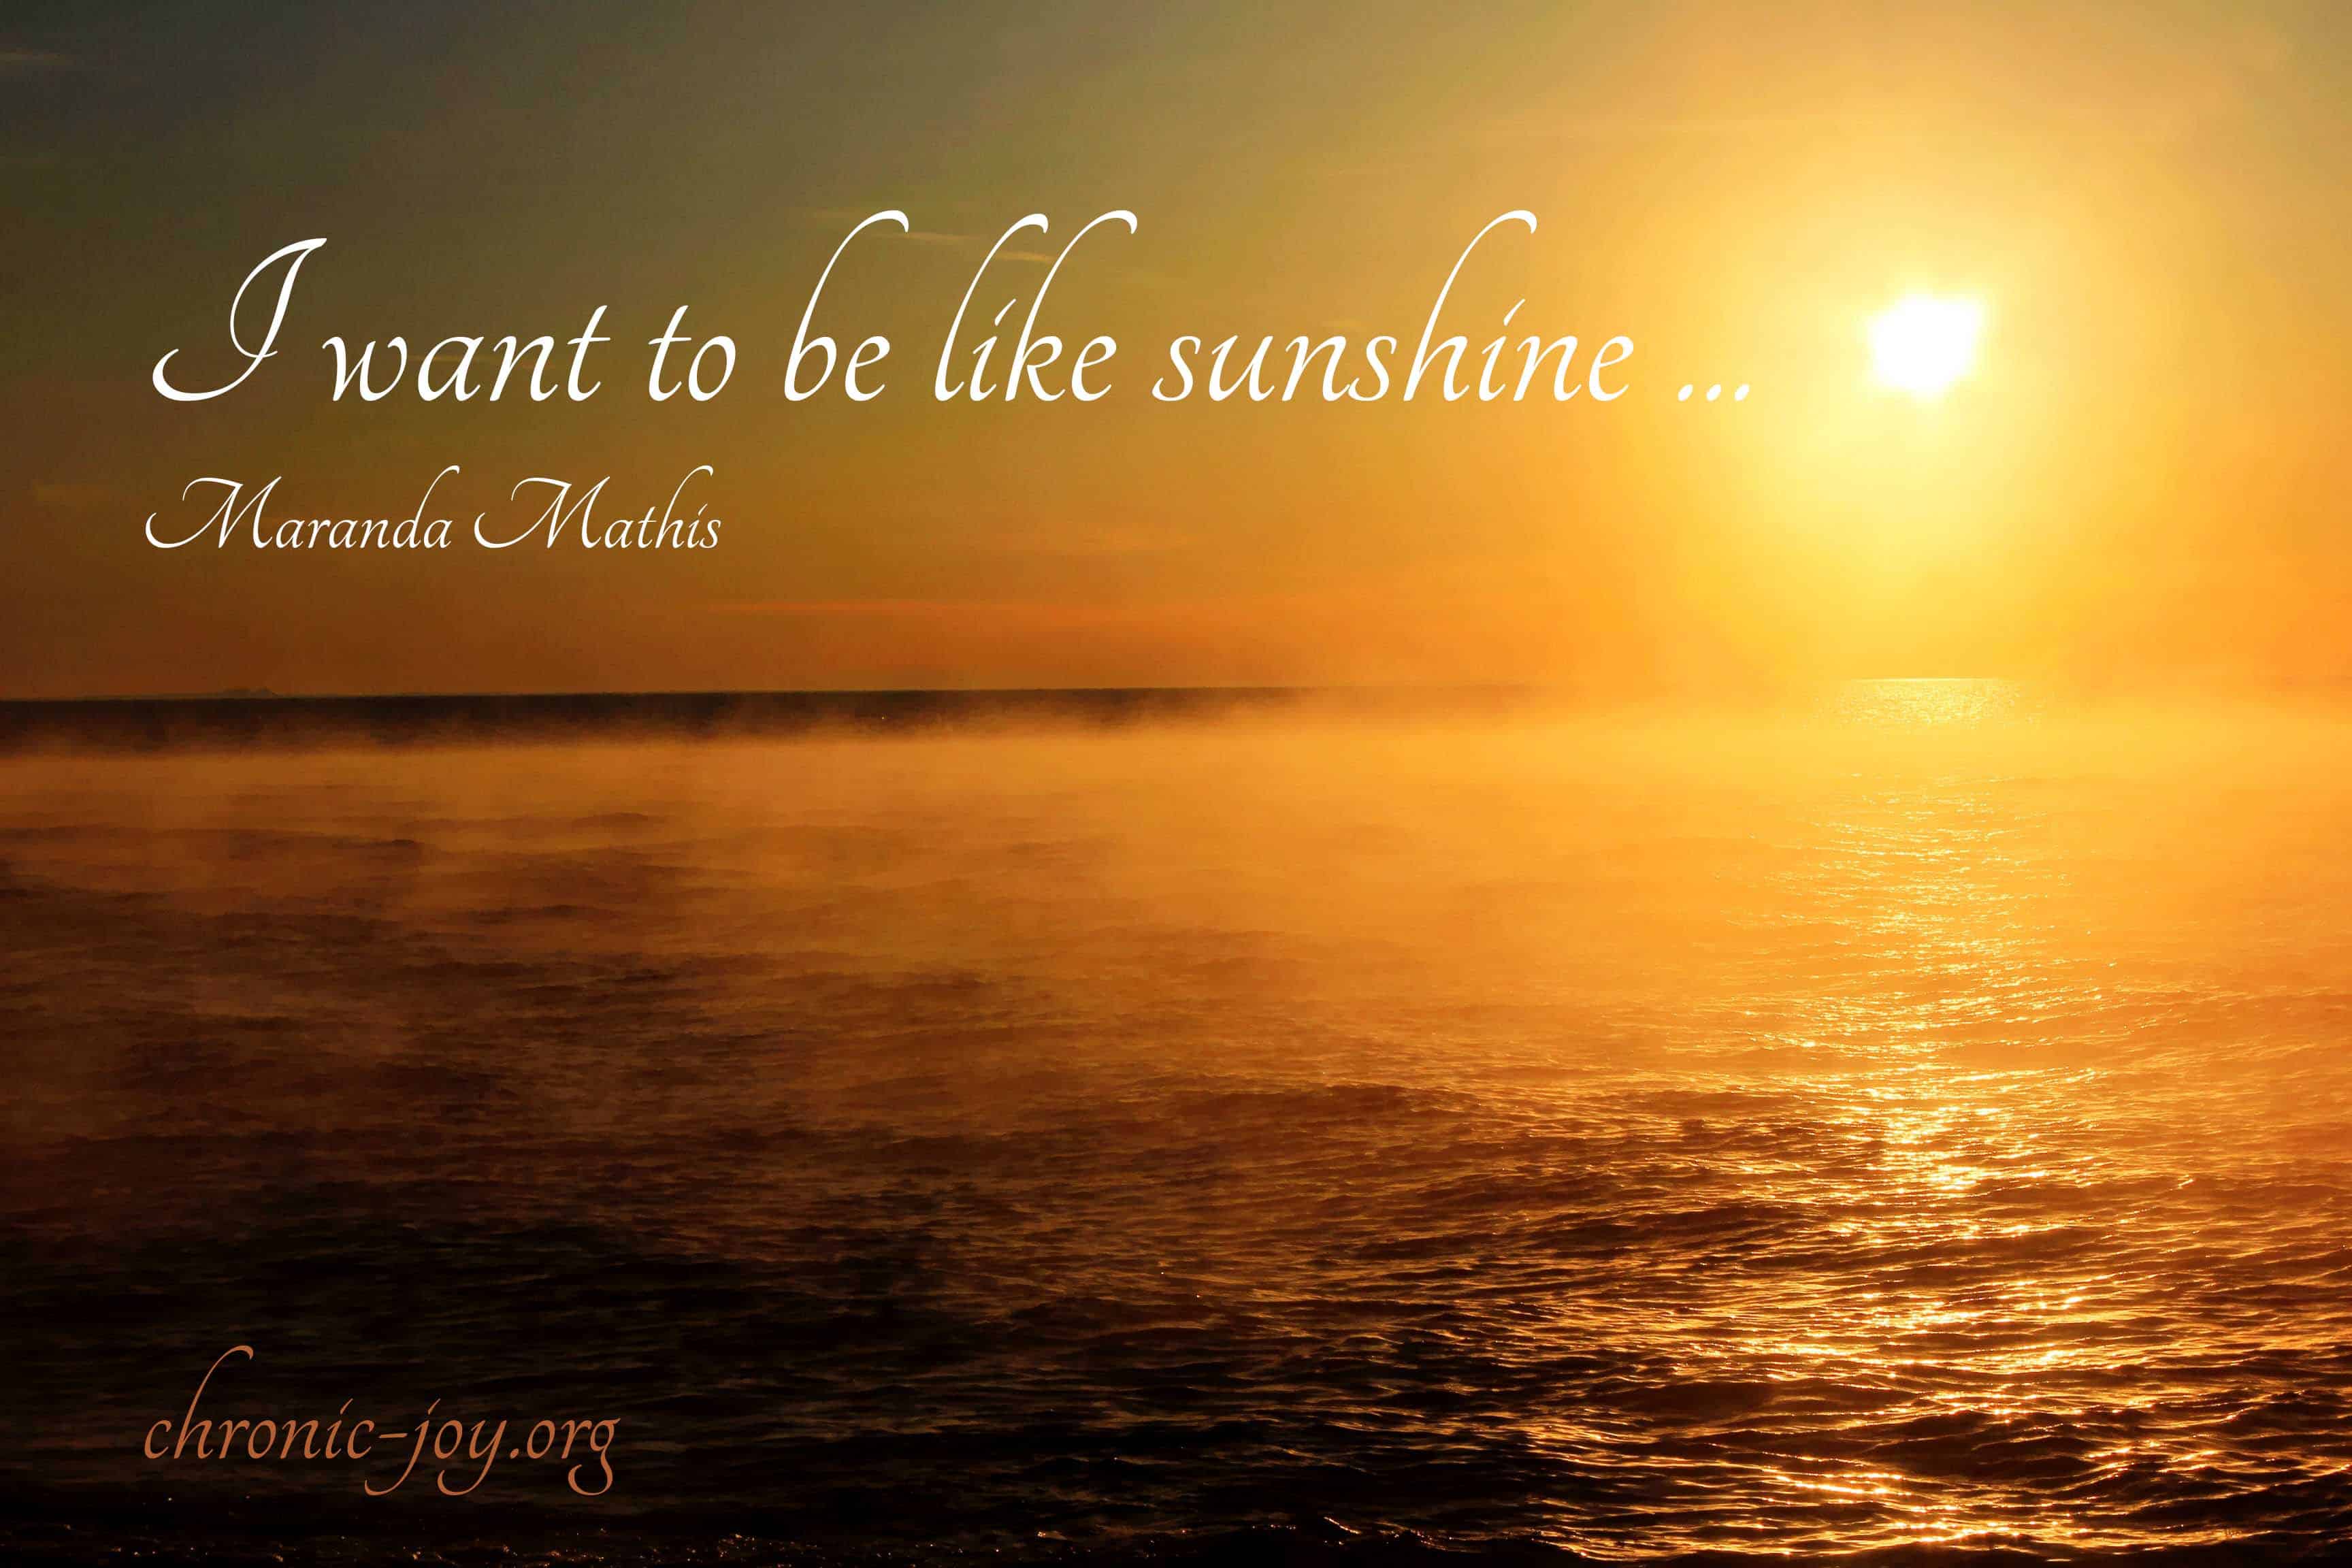 I want to be like sunshine ...